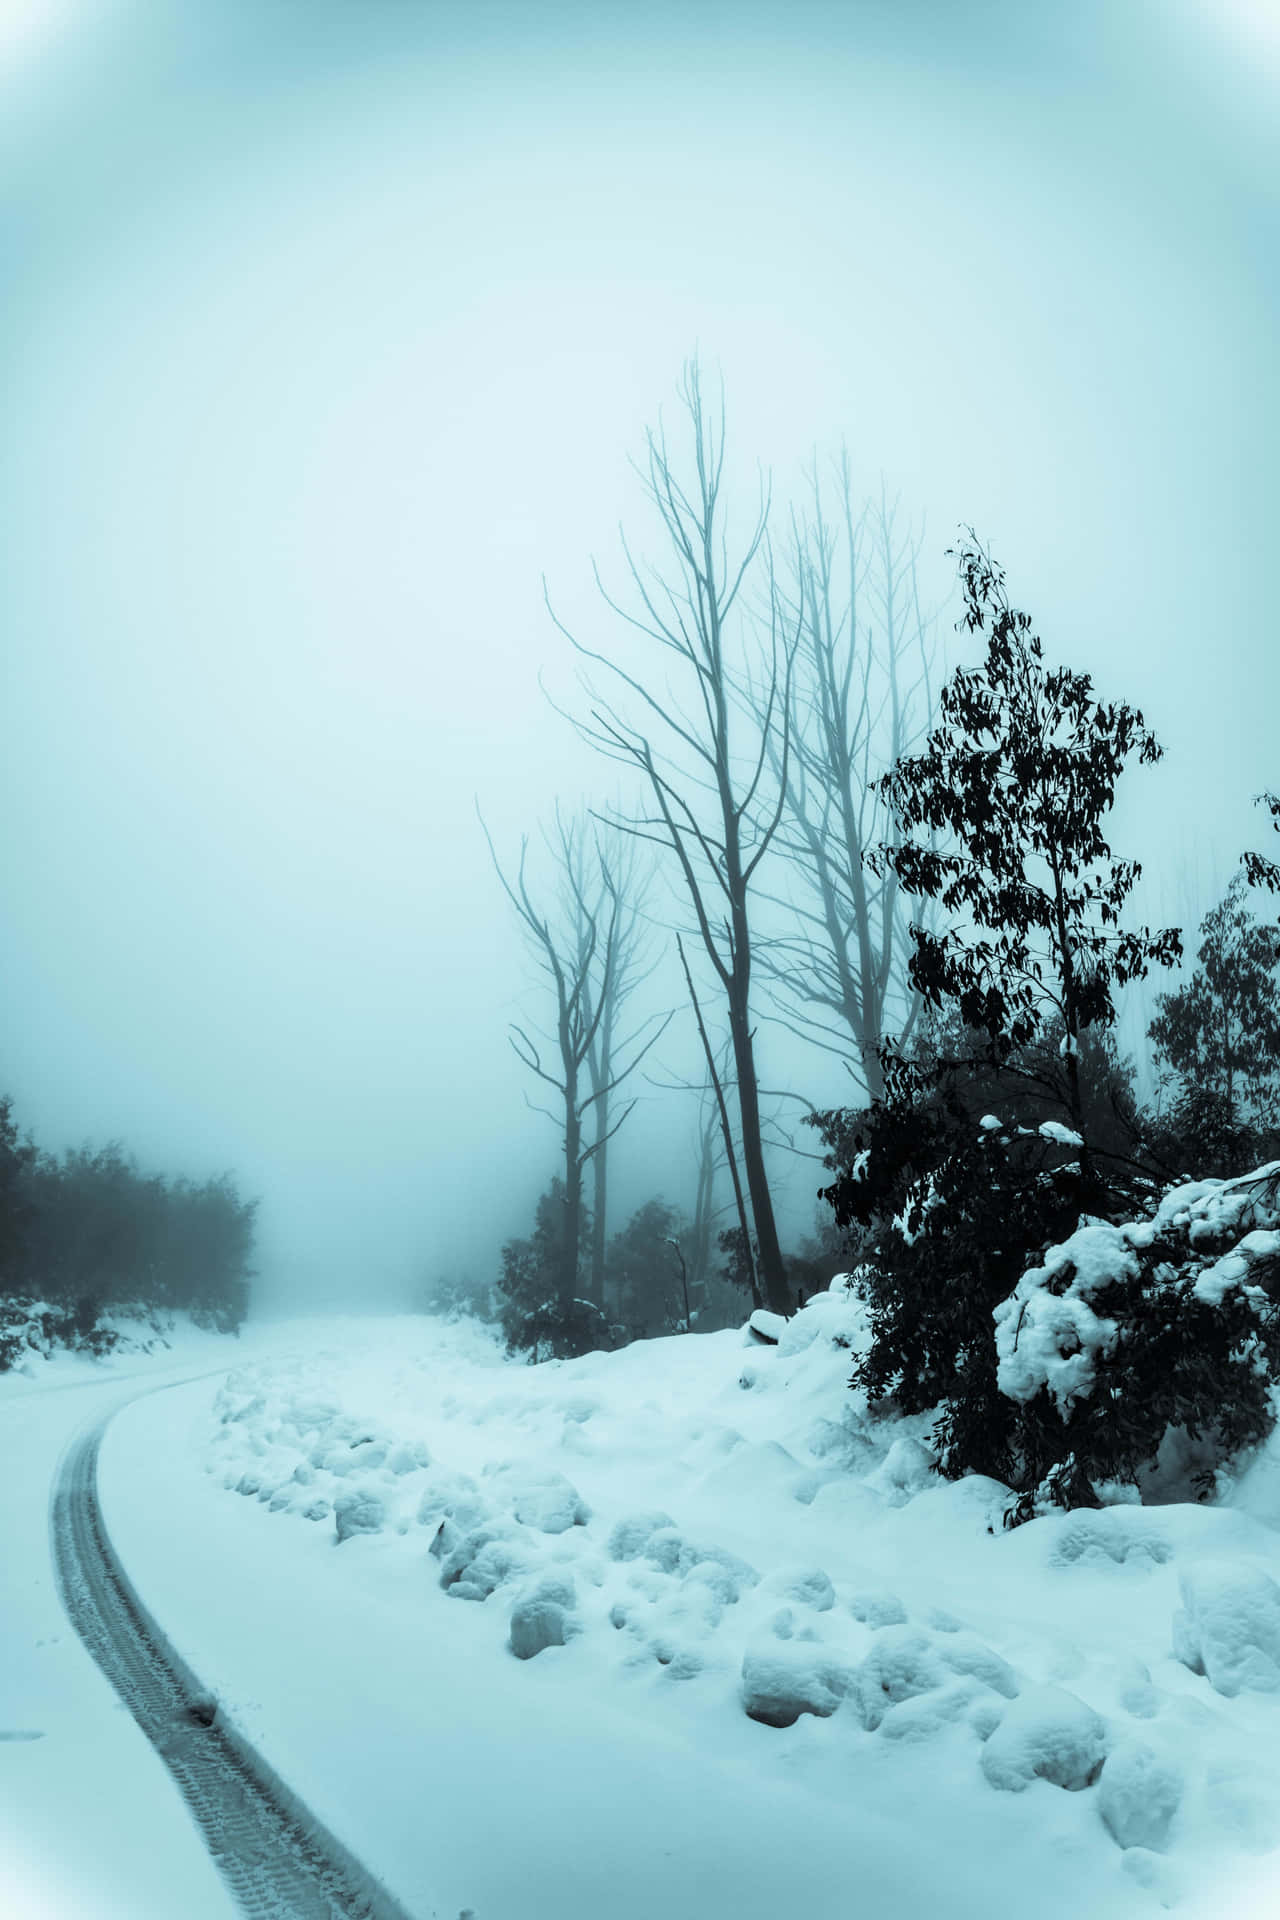 Snowy Road through a Winter Wonderland Wallpaper